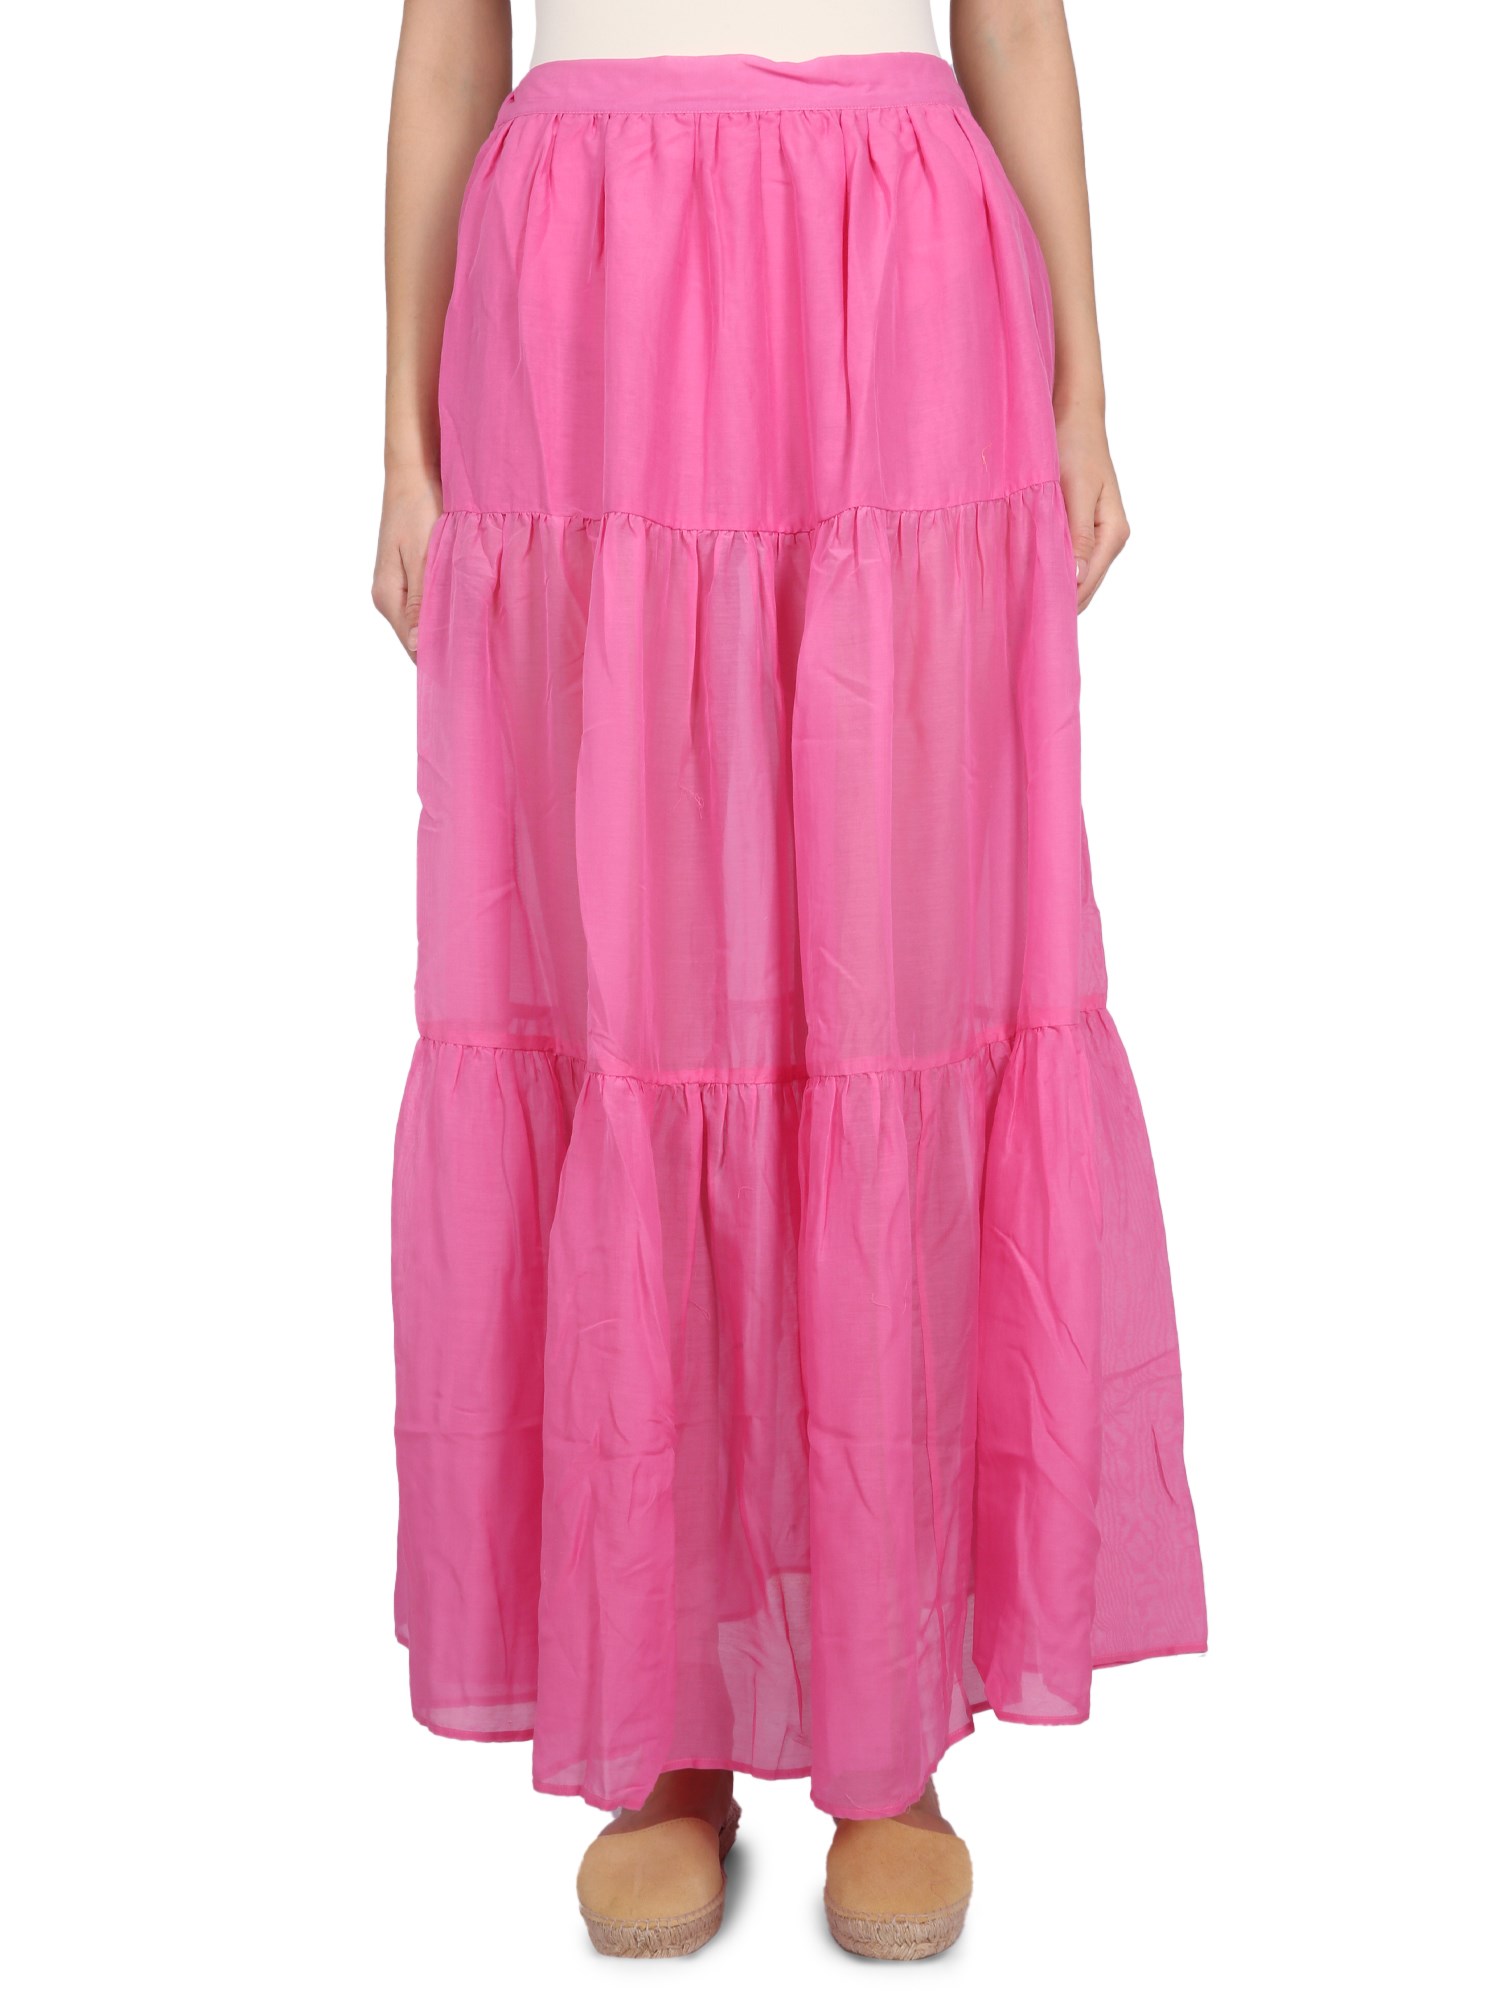 Shop Manebi Recife Skirt. In Pink